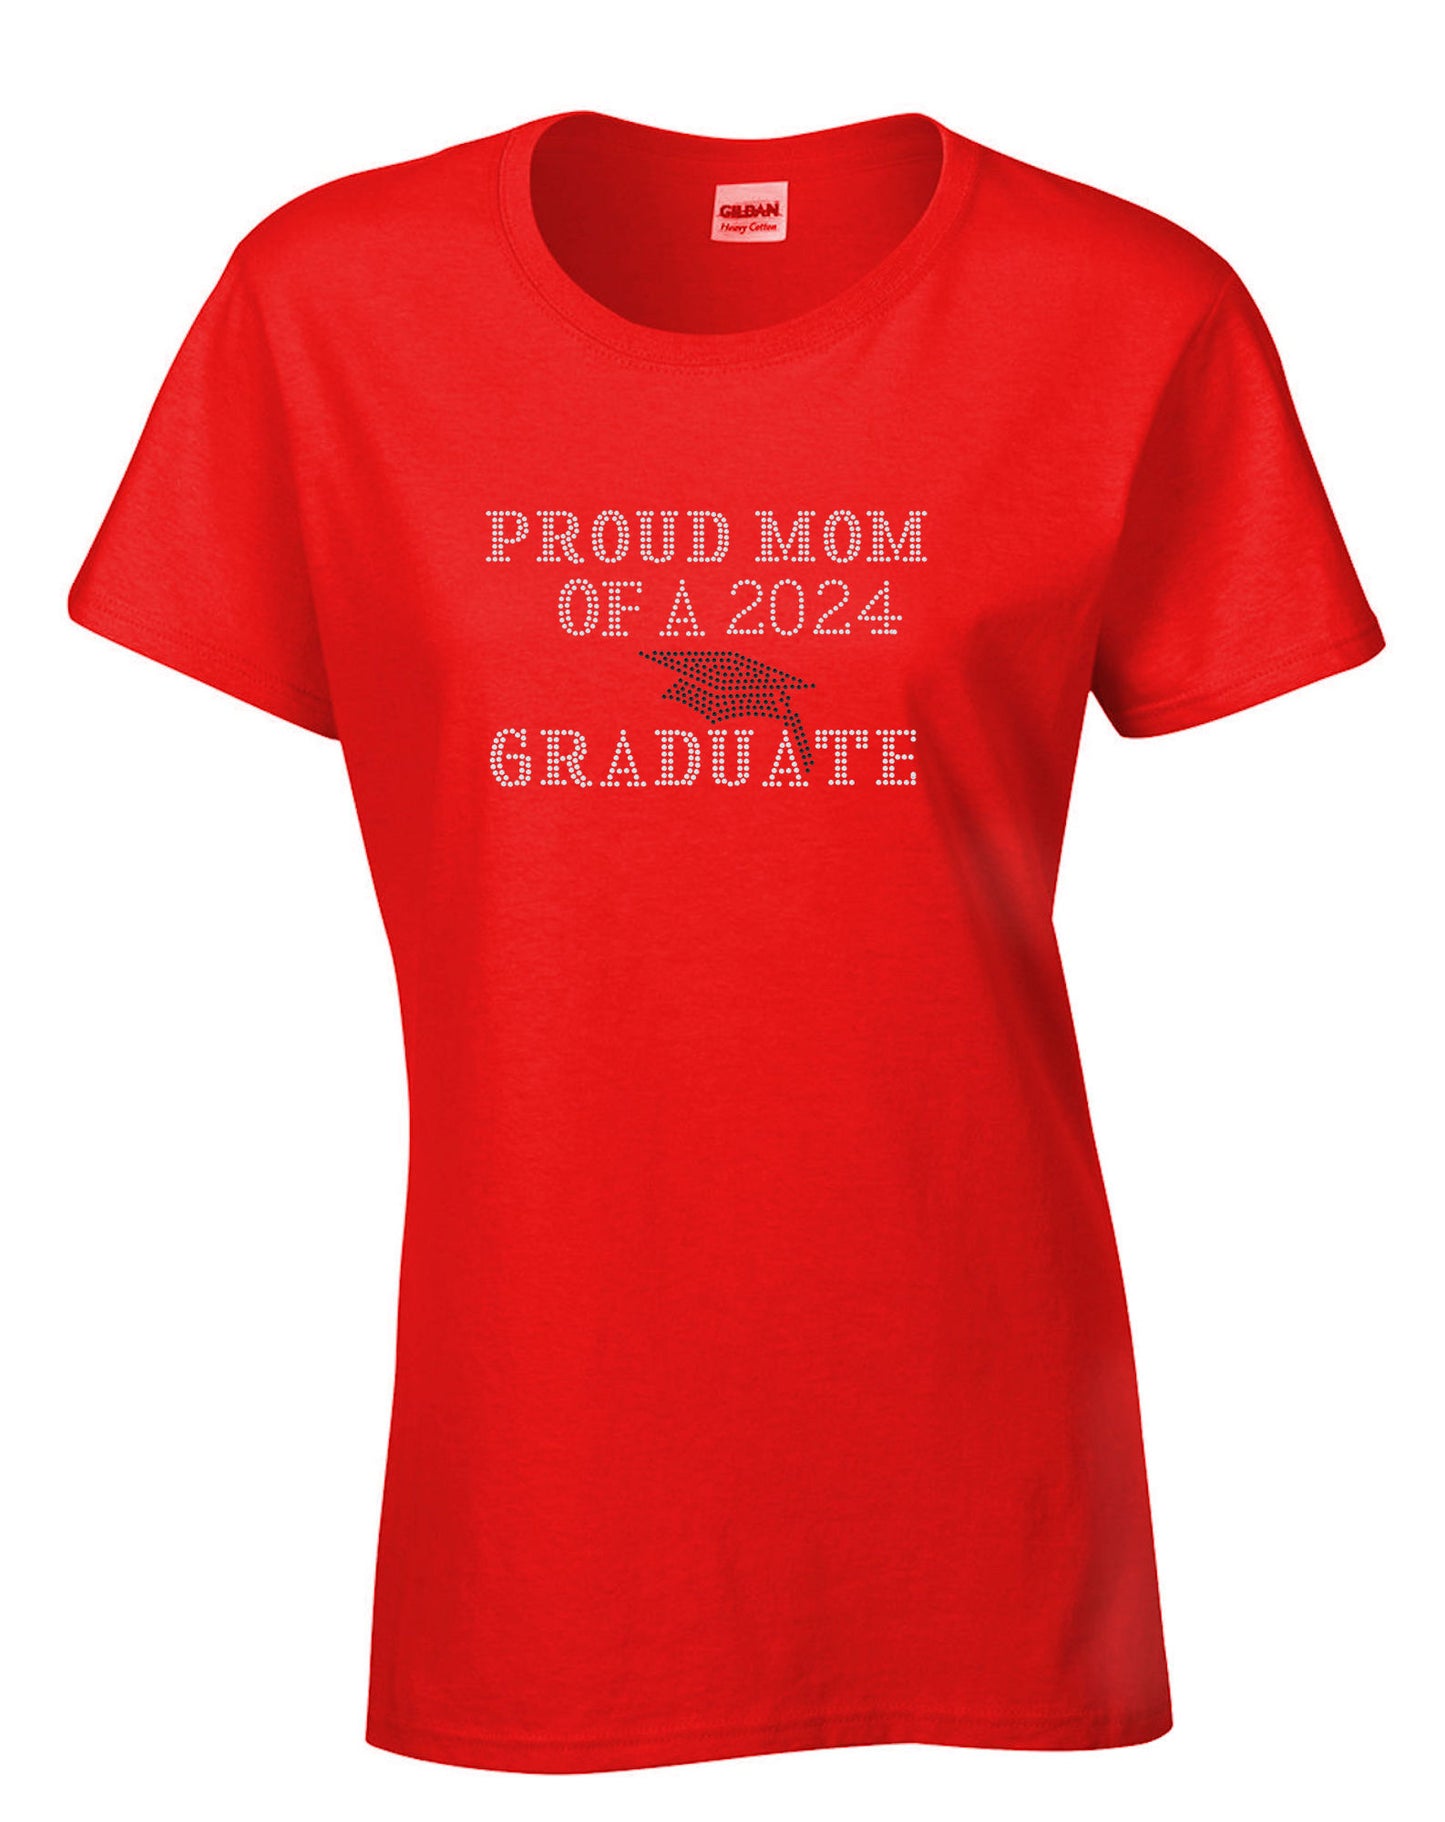 Proud Mom of Graduate Rhinestone T Shirt